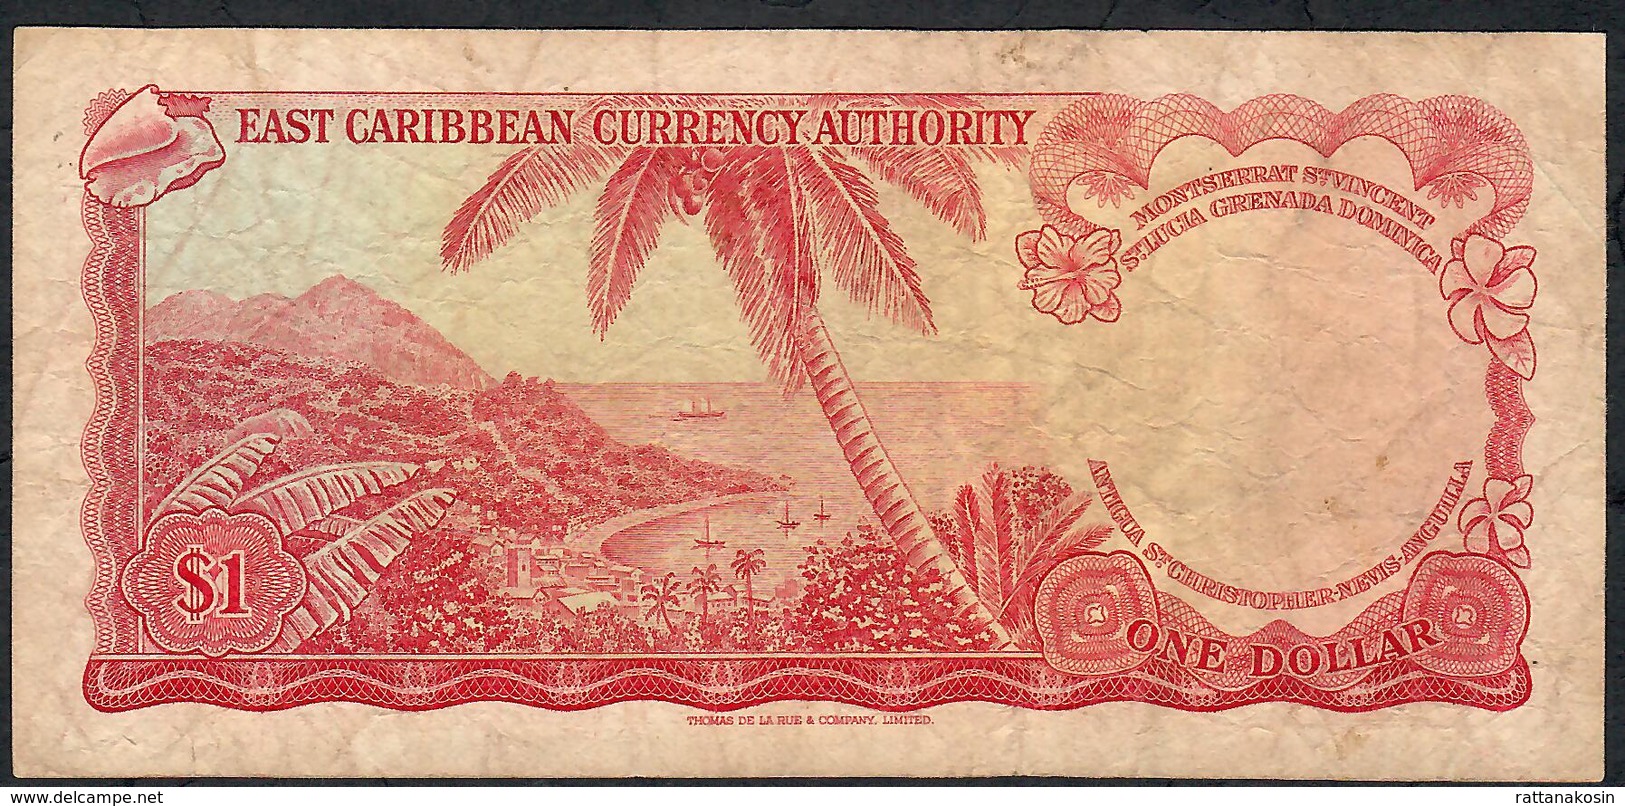 E.C.T. P13c8 1 DOLLAR 1965  #B54 Signature 8 Issued 1974  VF  NO P.h. - Oostelijke Caraïben